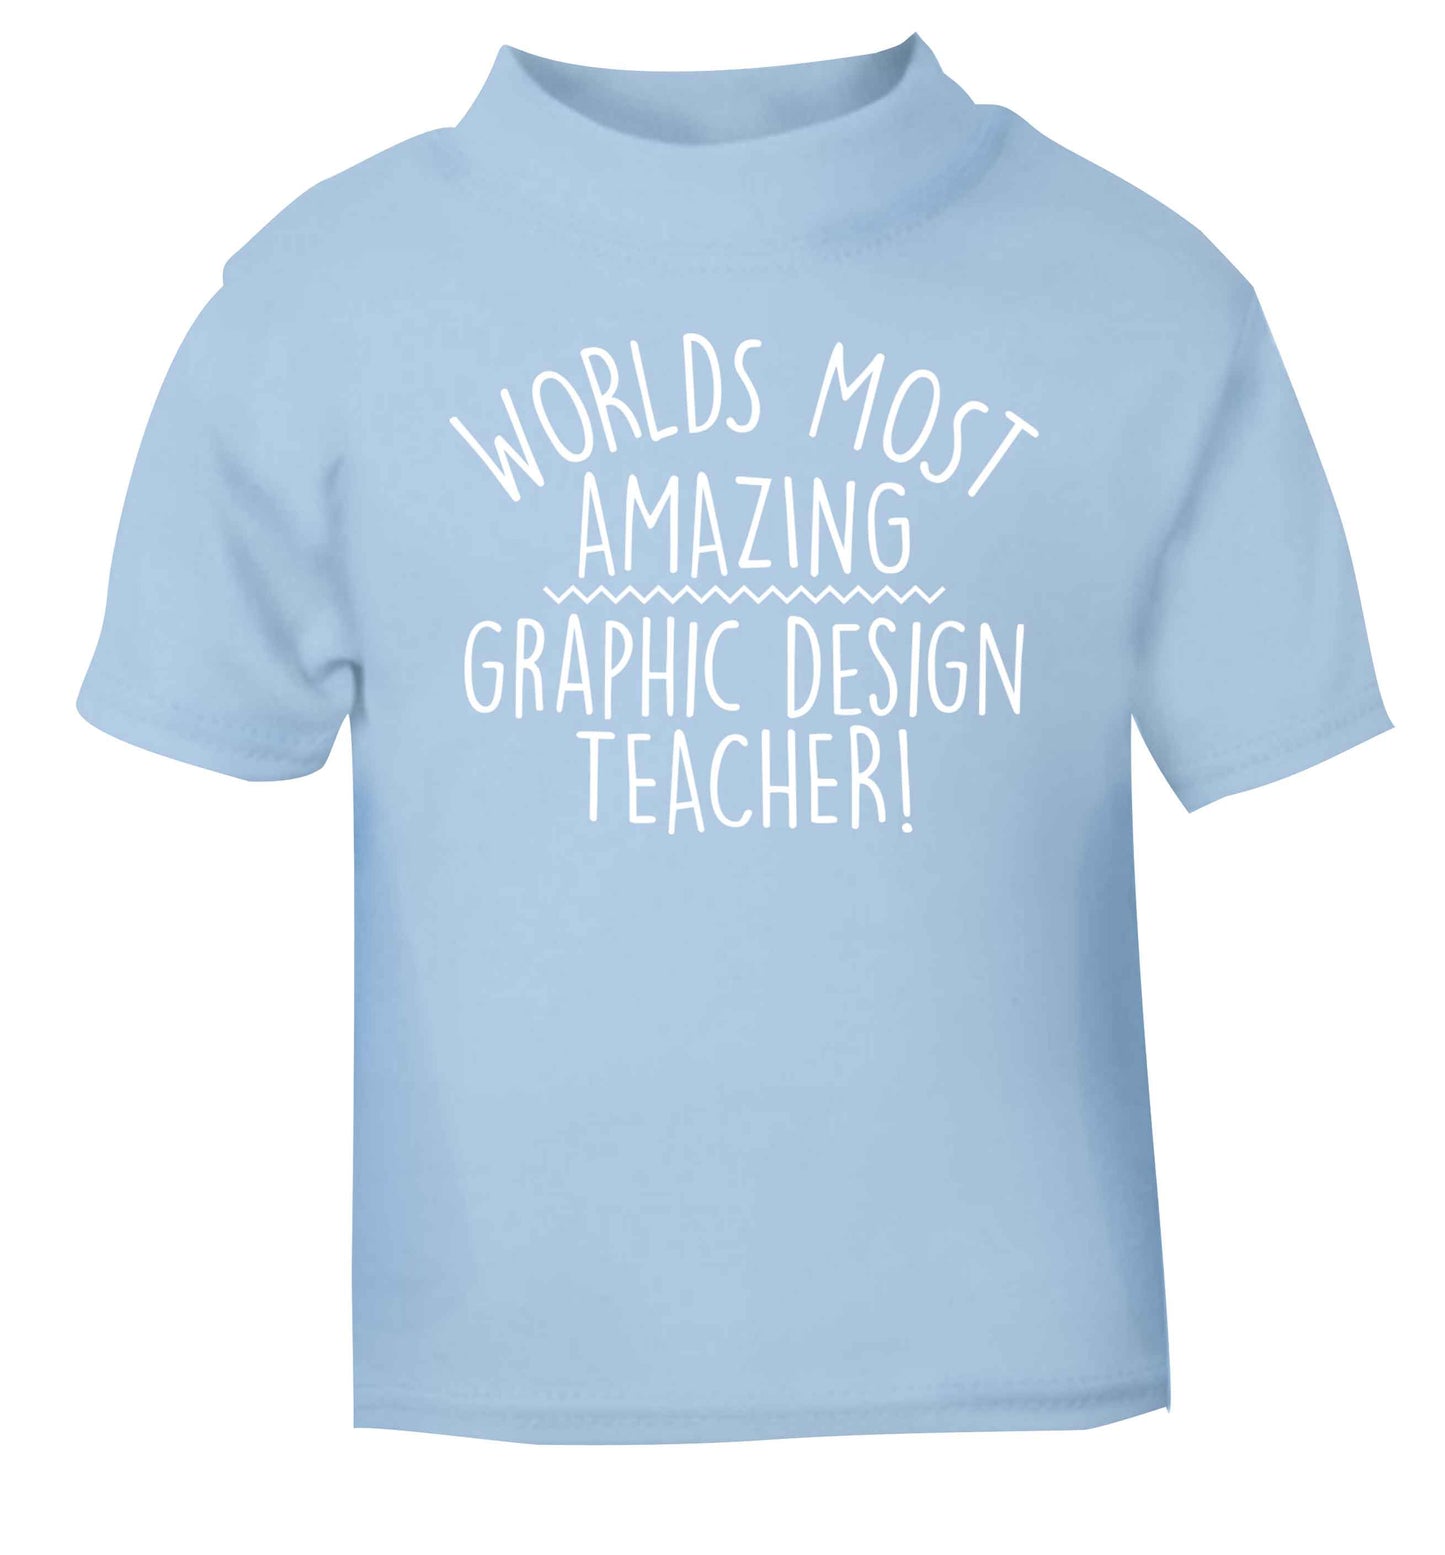 Worlds most amazing graphic design teacher light blue baby toddler Tshirt 2 Years